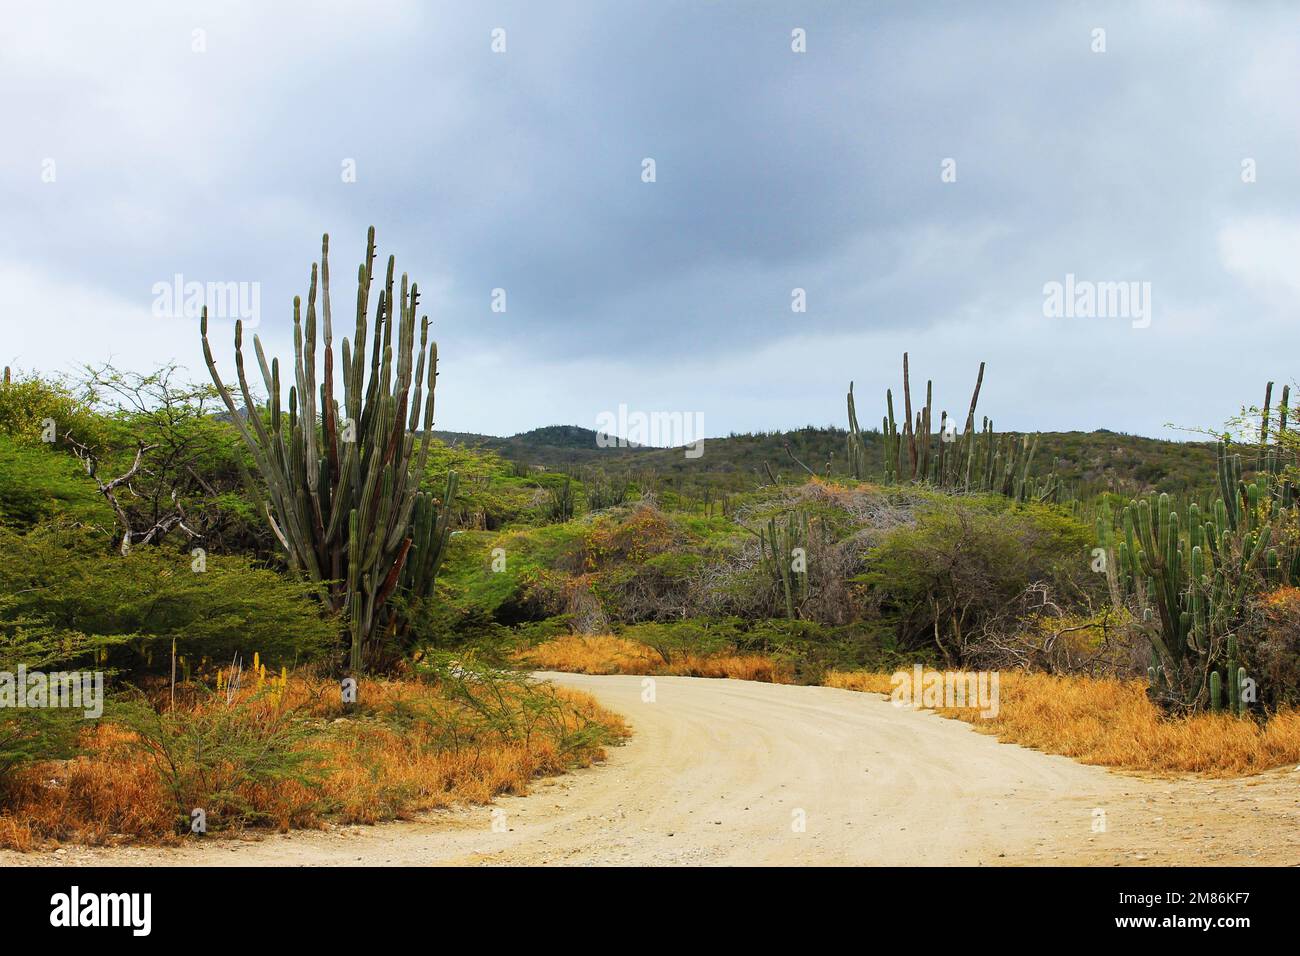 Dirt road through the desert, Aruba Stock Photo